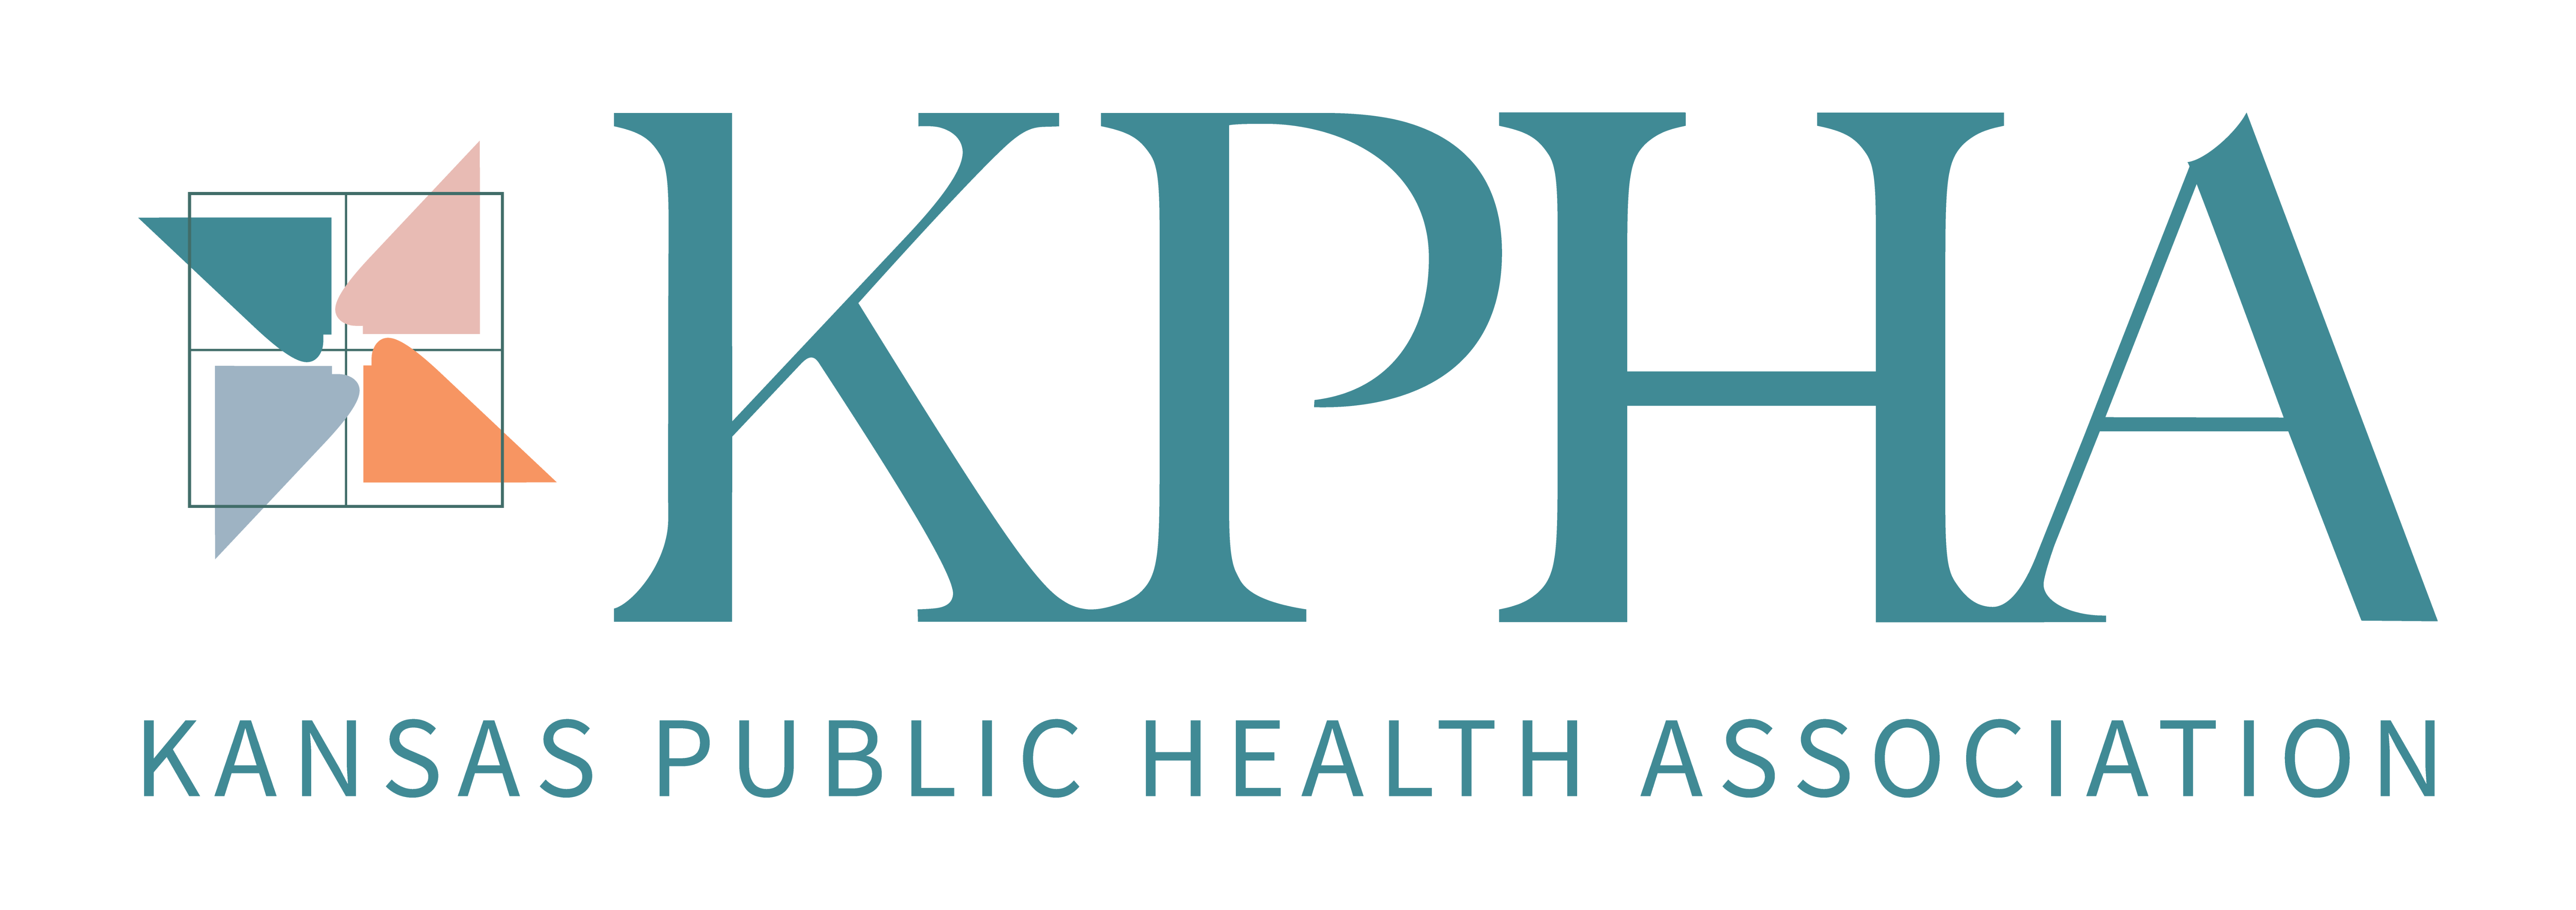 Kansas Public Health Association Conference